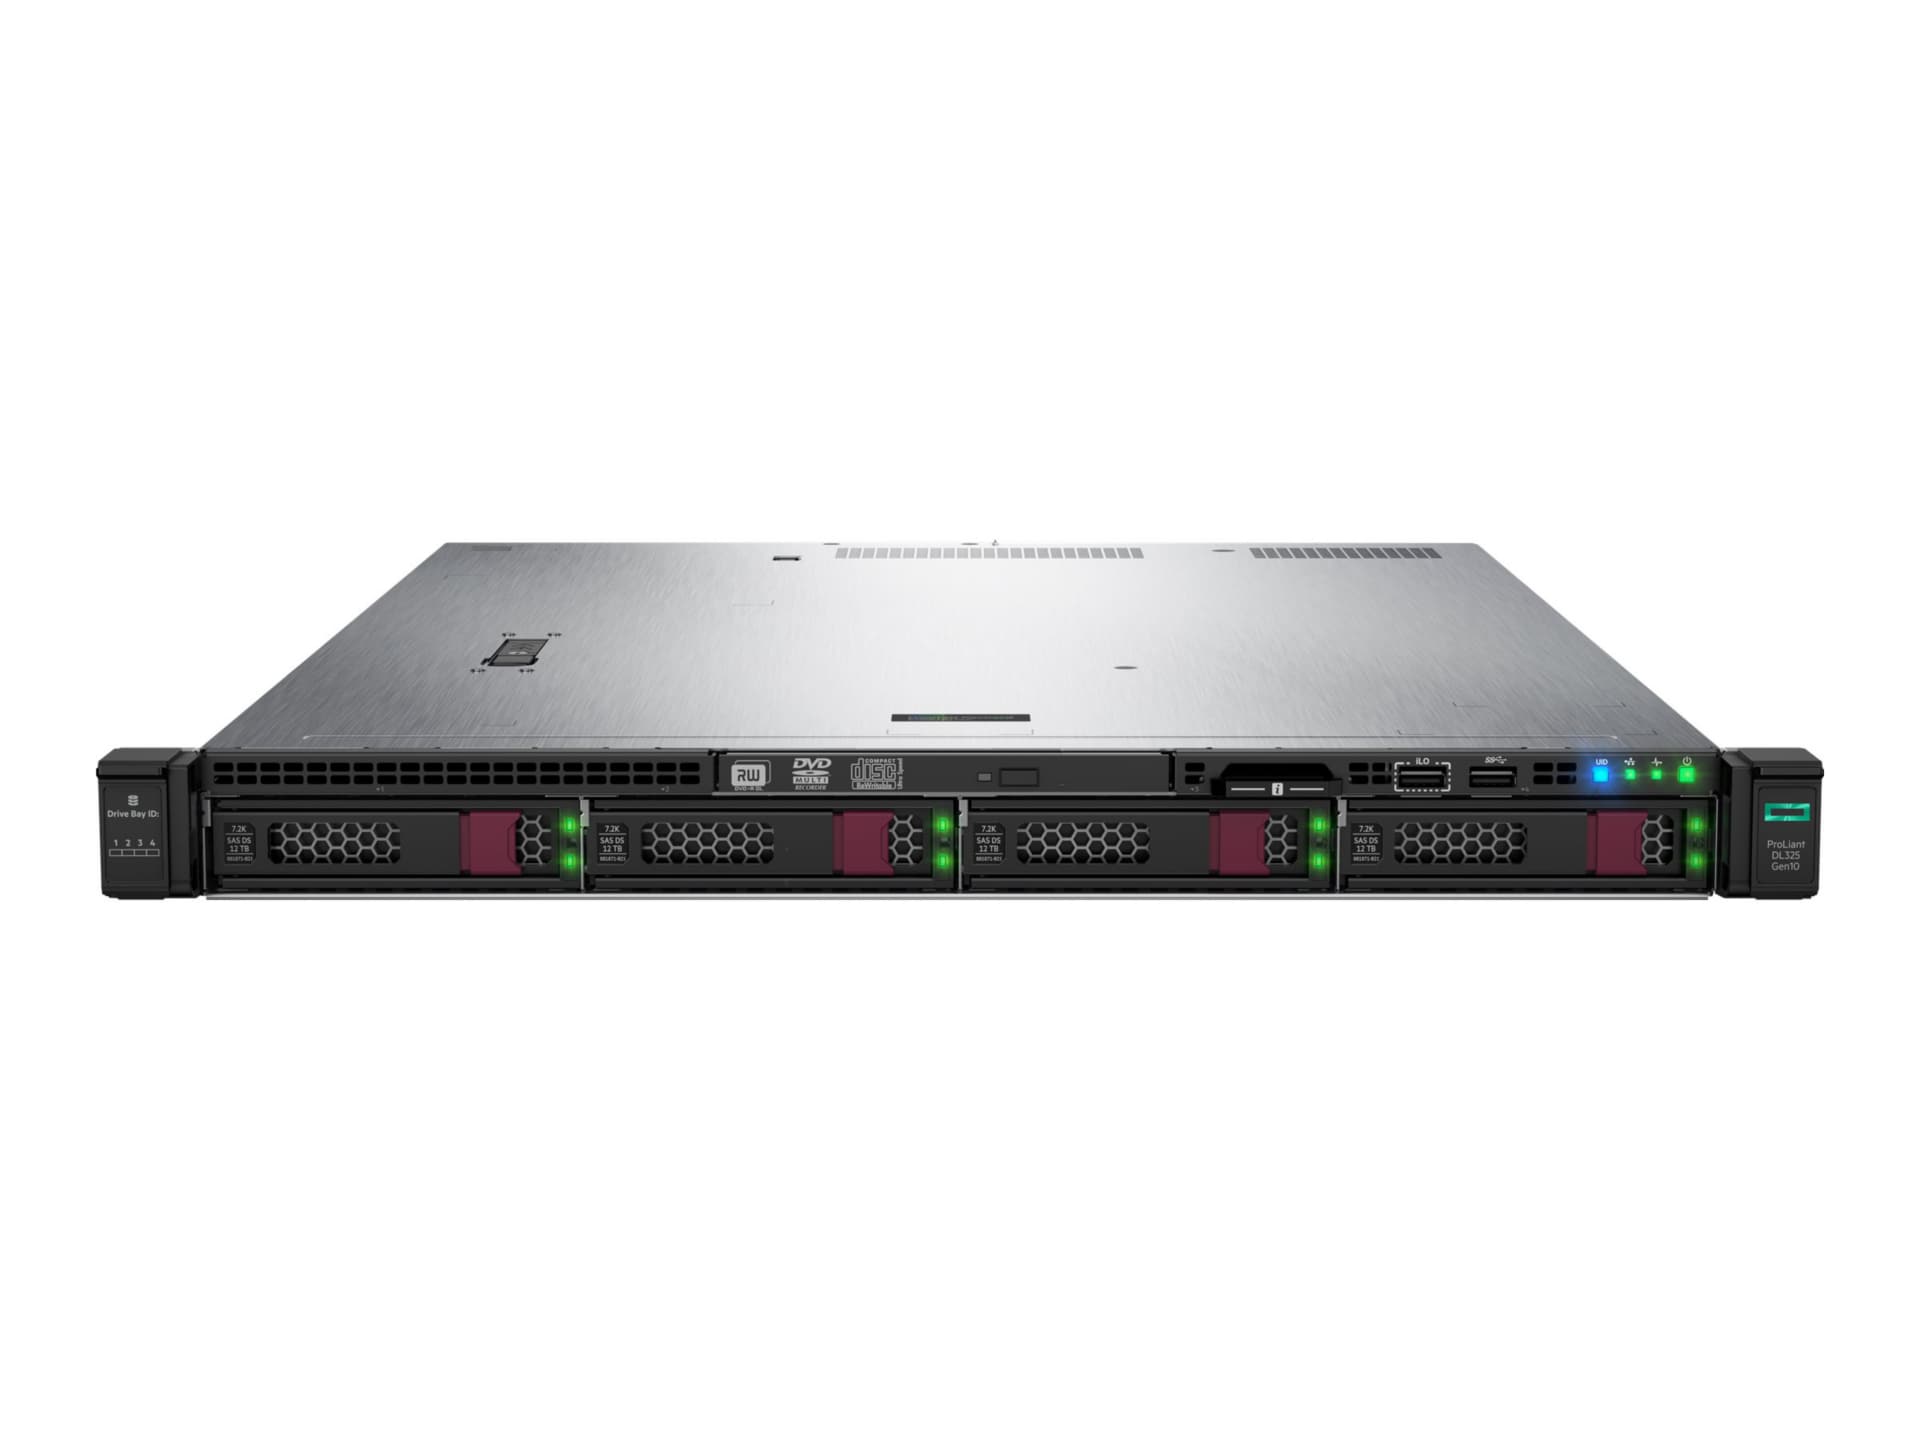 HPE ProLiant DL325 Gen10 Entry - rack-mountable - EPYC 7251 2.1 GHz - 8 GB